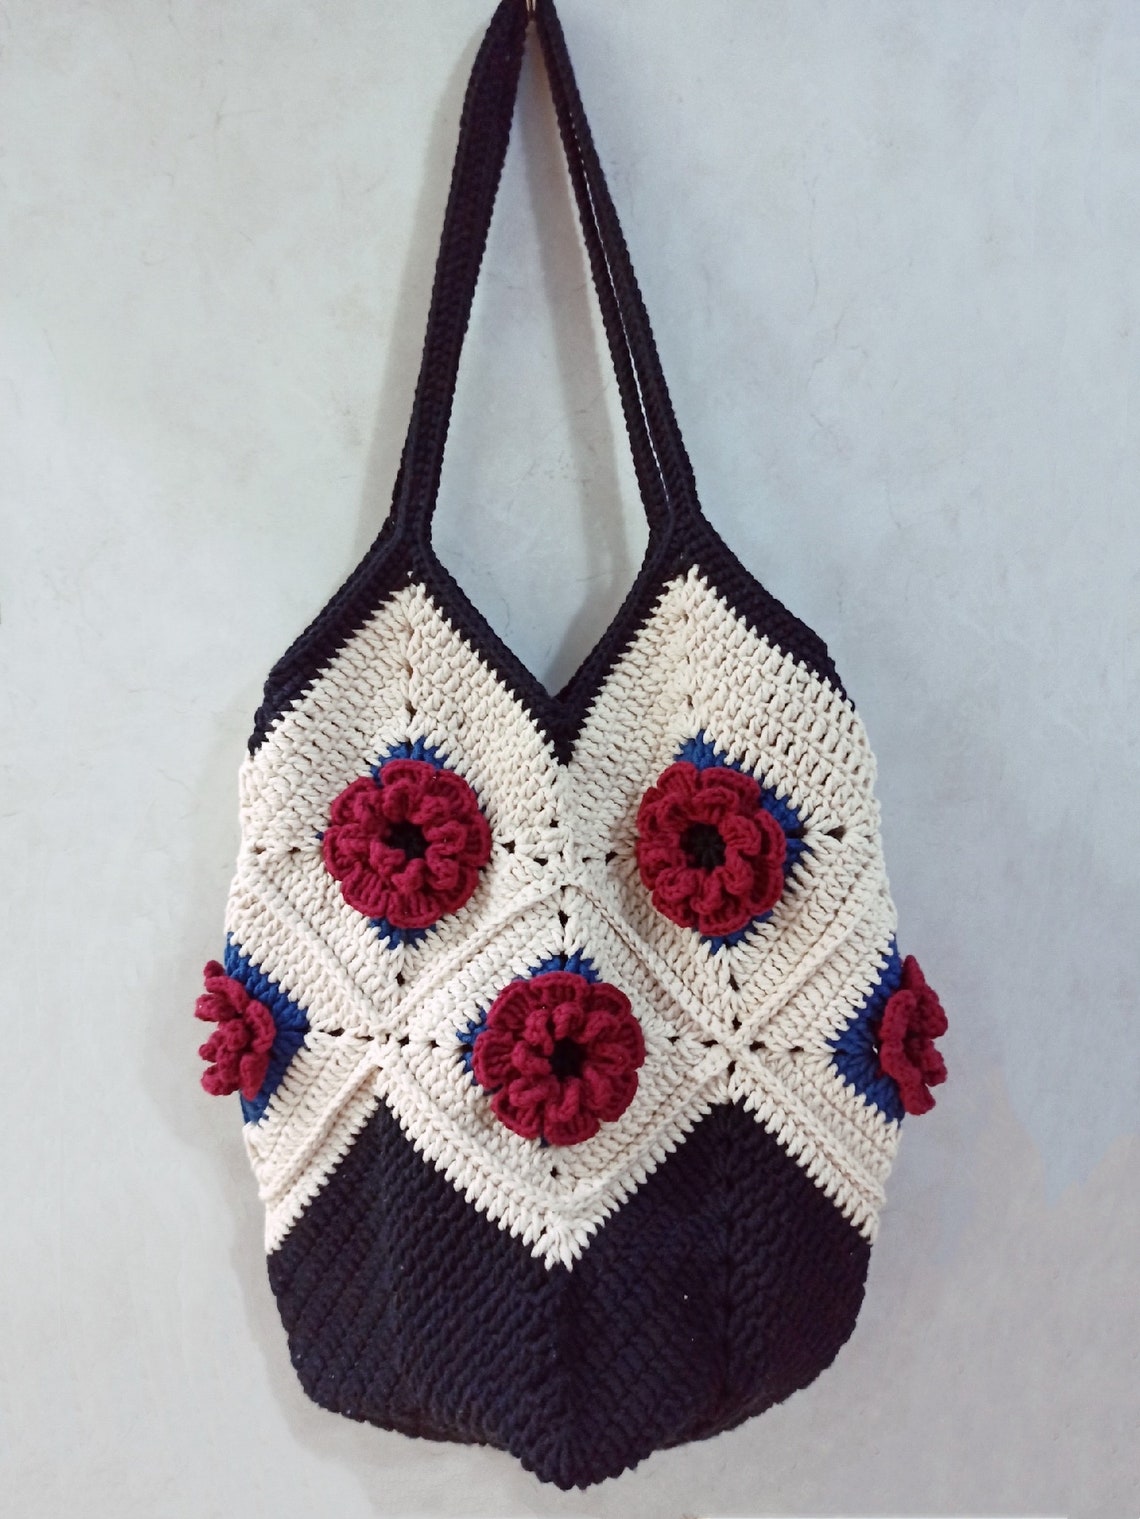 Crochet flower bag amigurumi flower bags crochet bag | Etsy